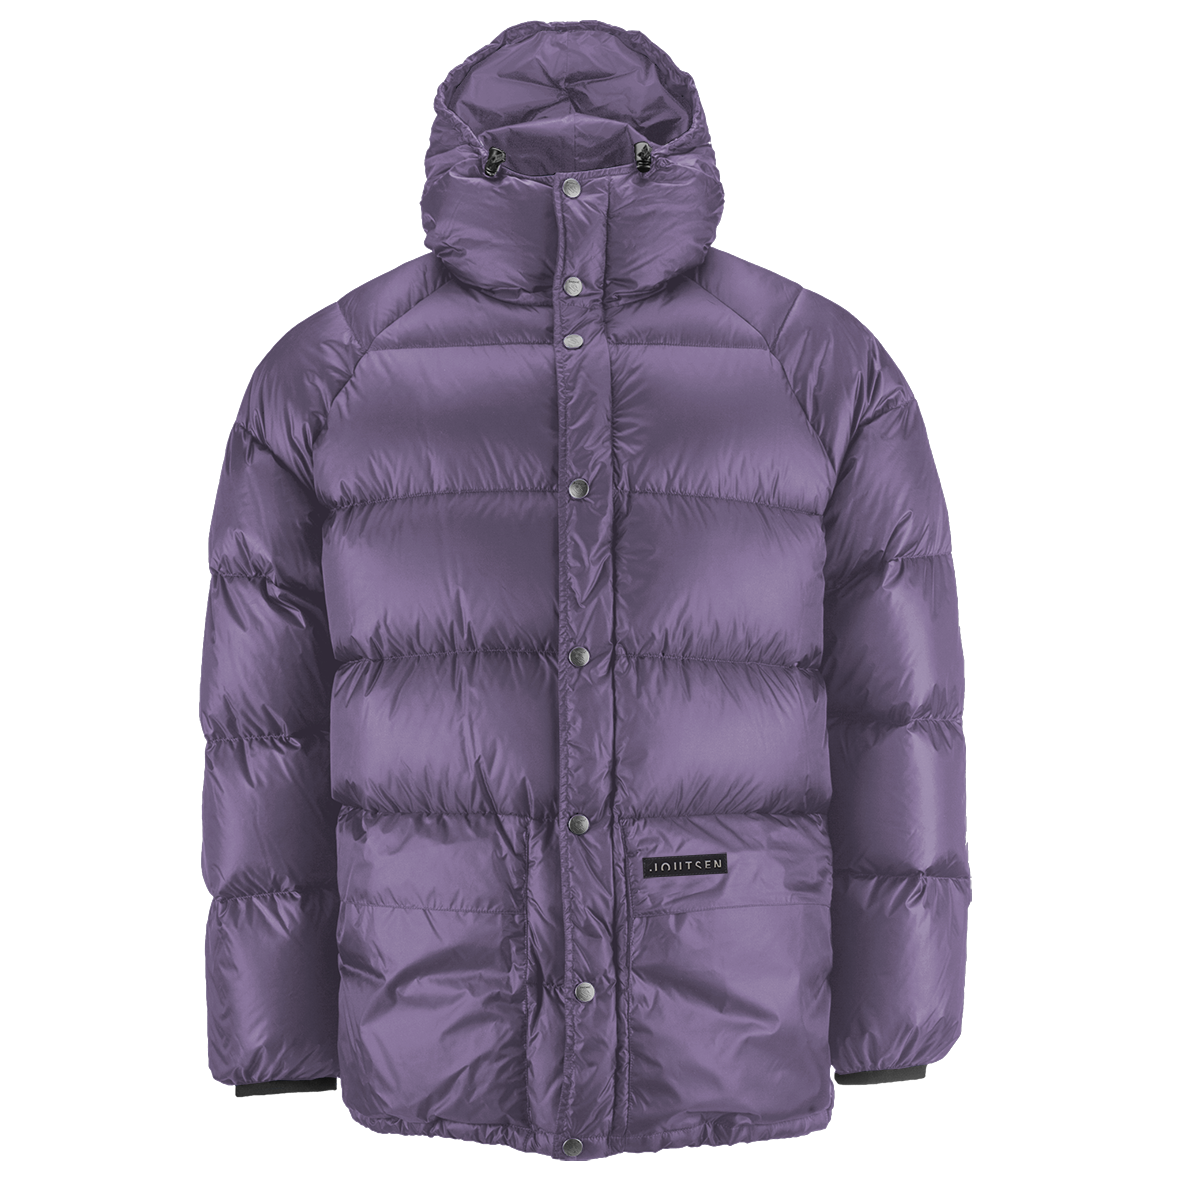 Tauko Down Coat Colour - Joutsen - Lavendel